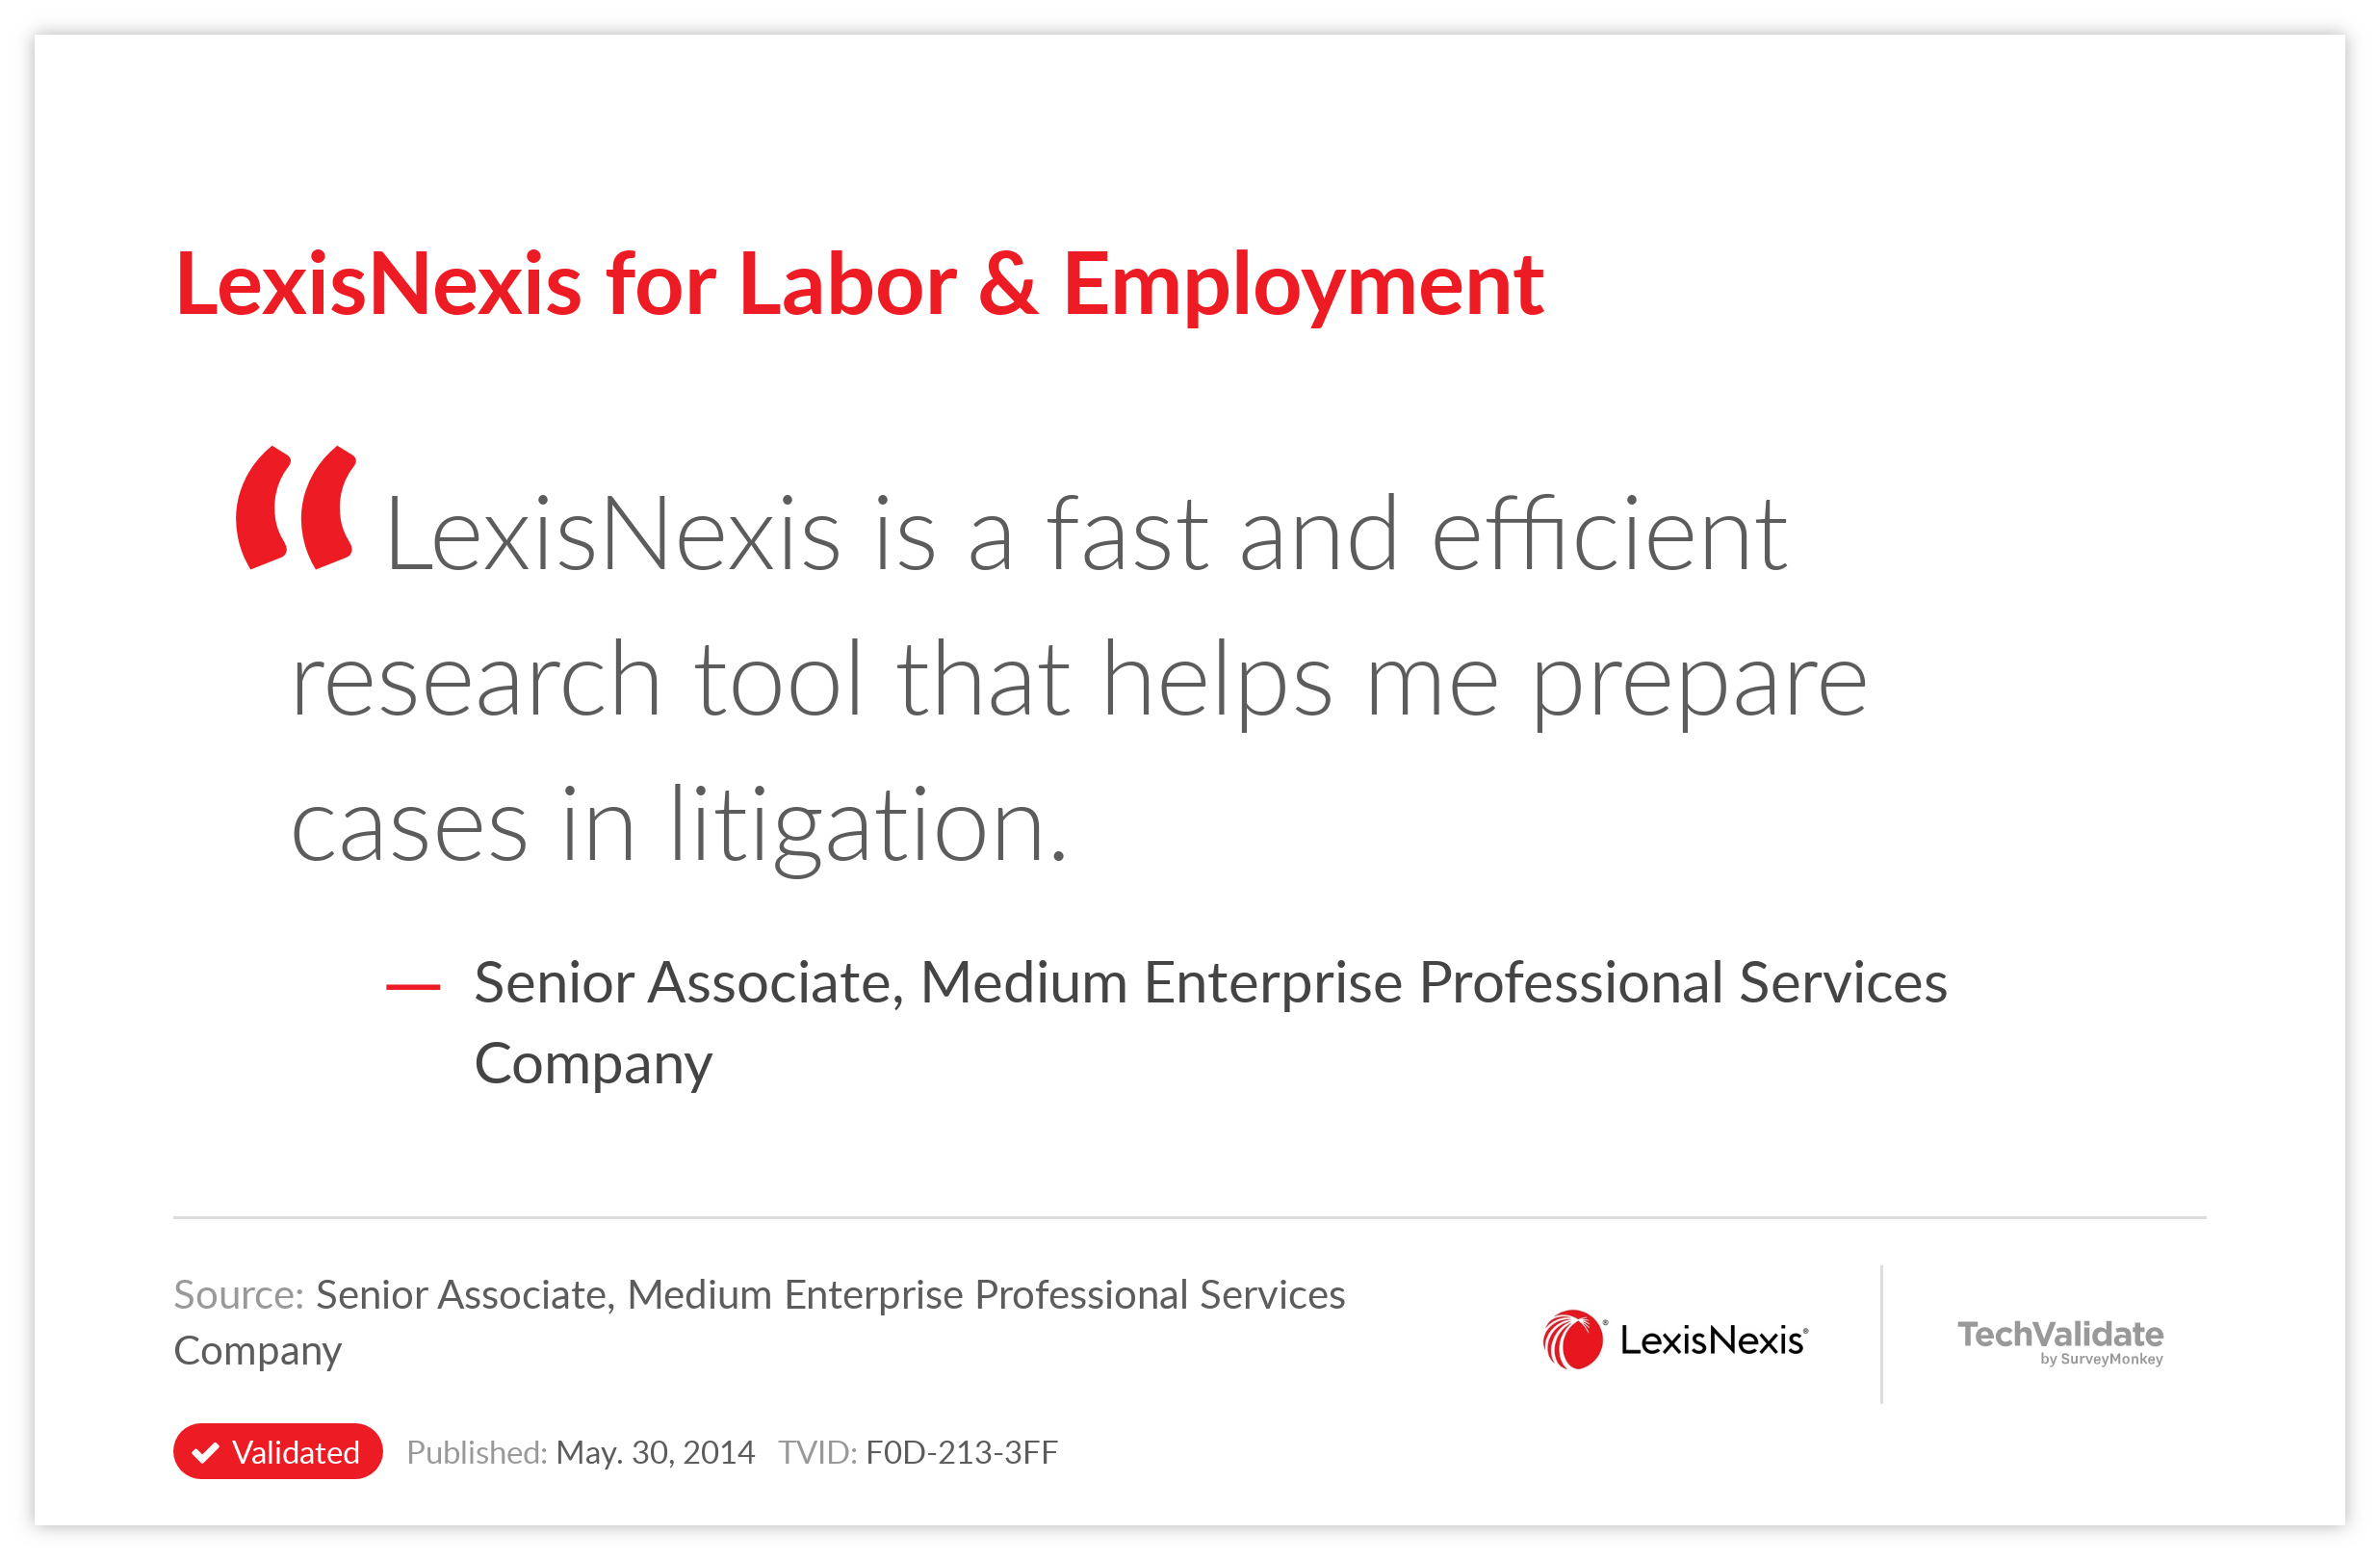 LexisNexis for Labor & Employment